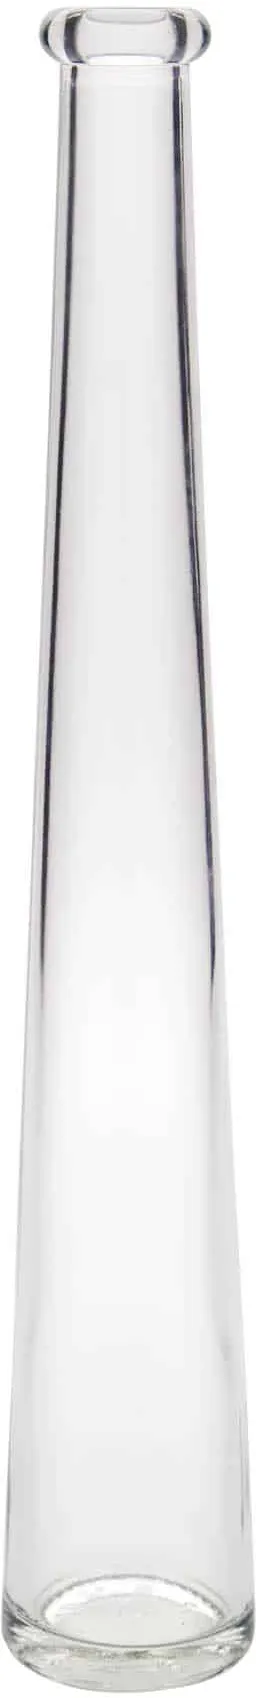 Botella de vidrio 'Dama Rondo' de 200 ml, boca: corcho